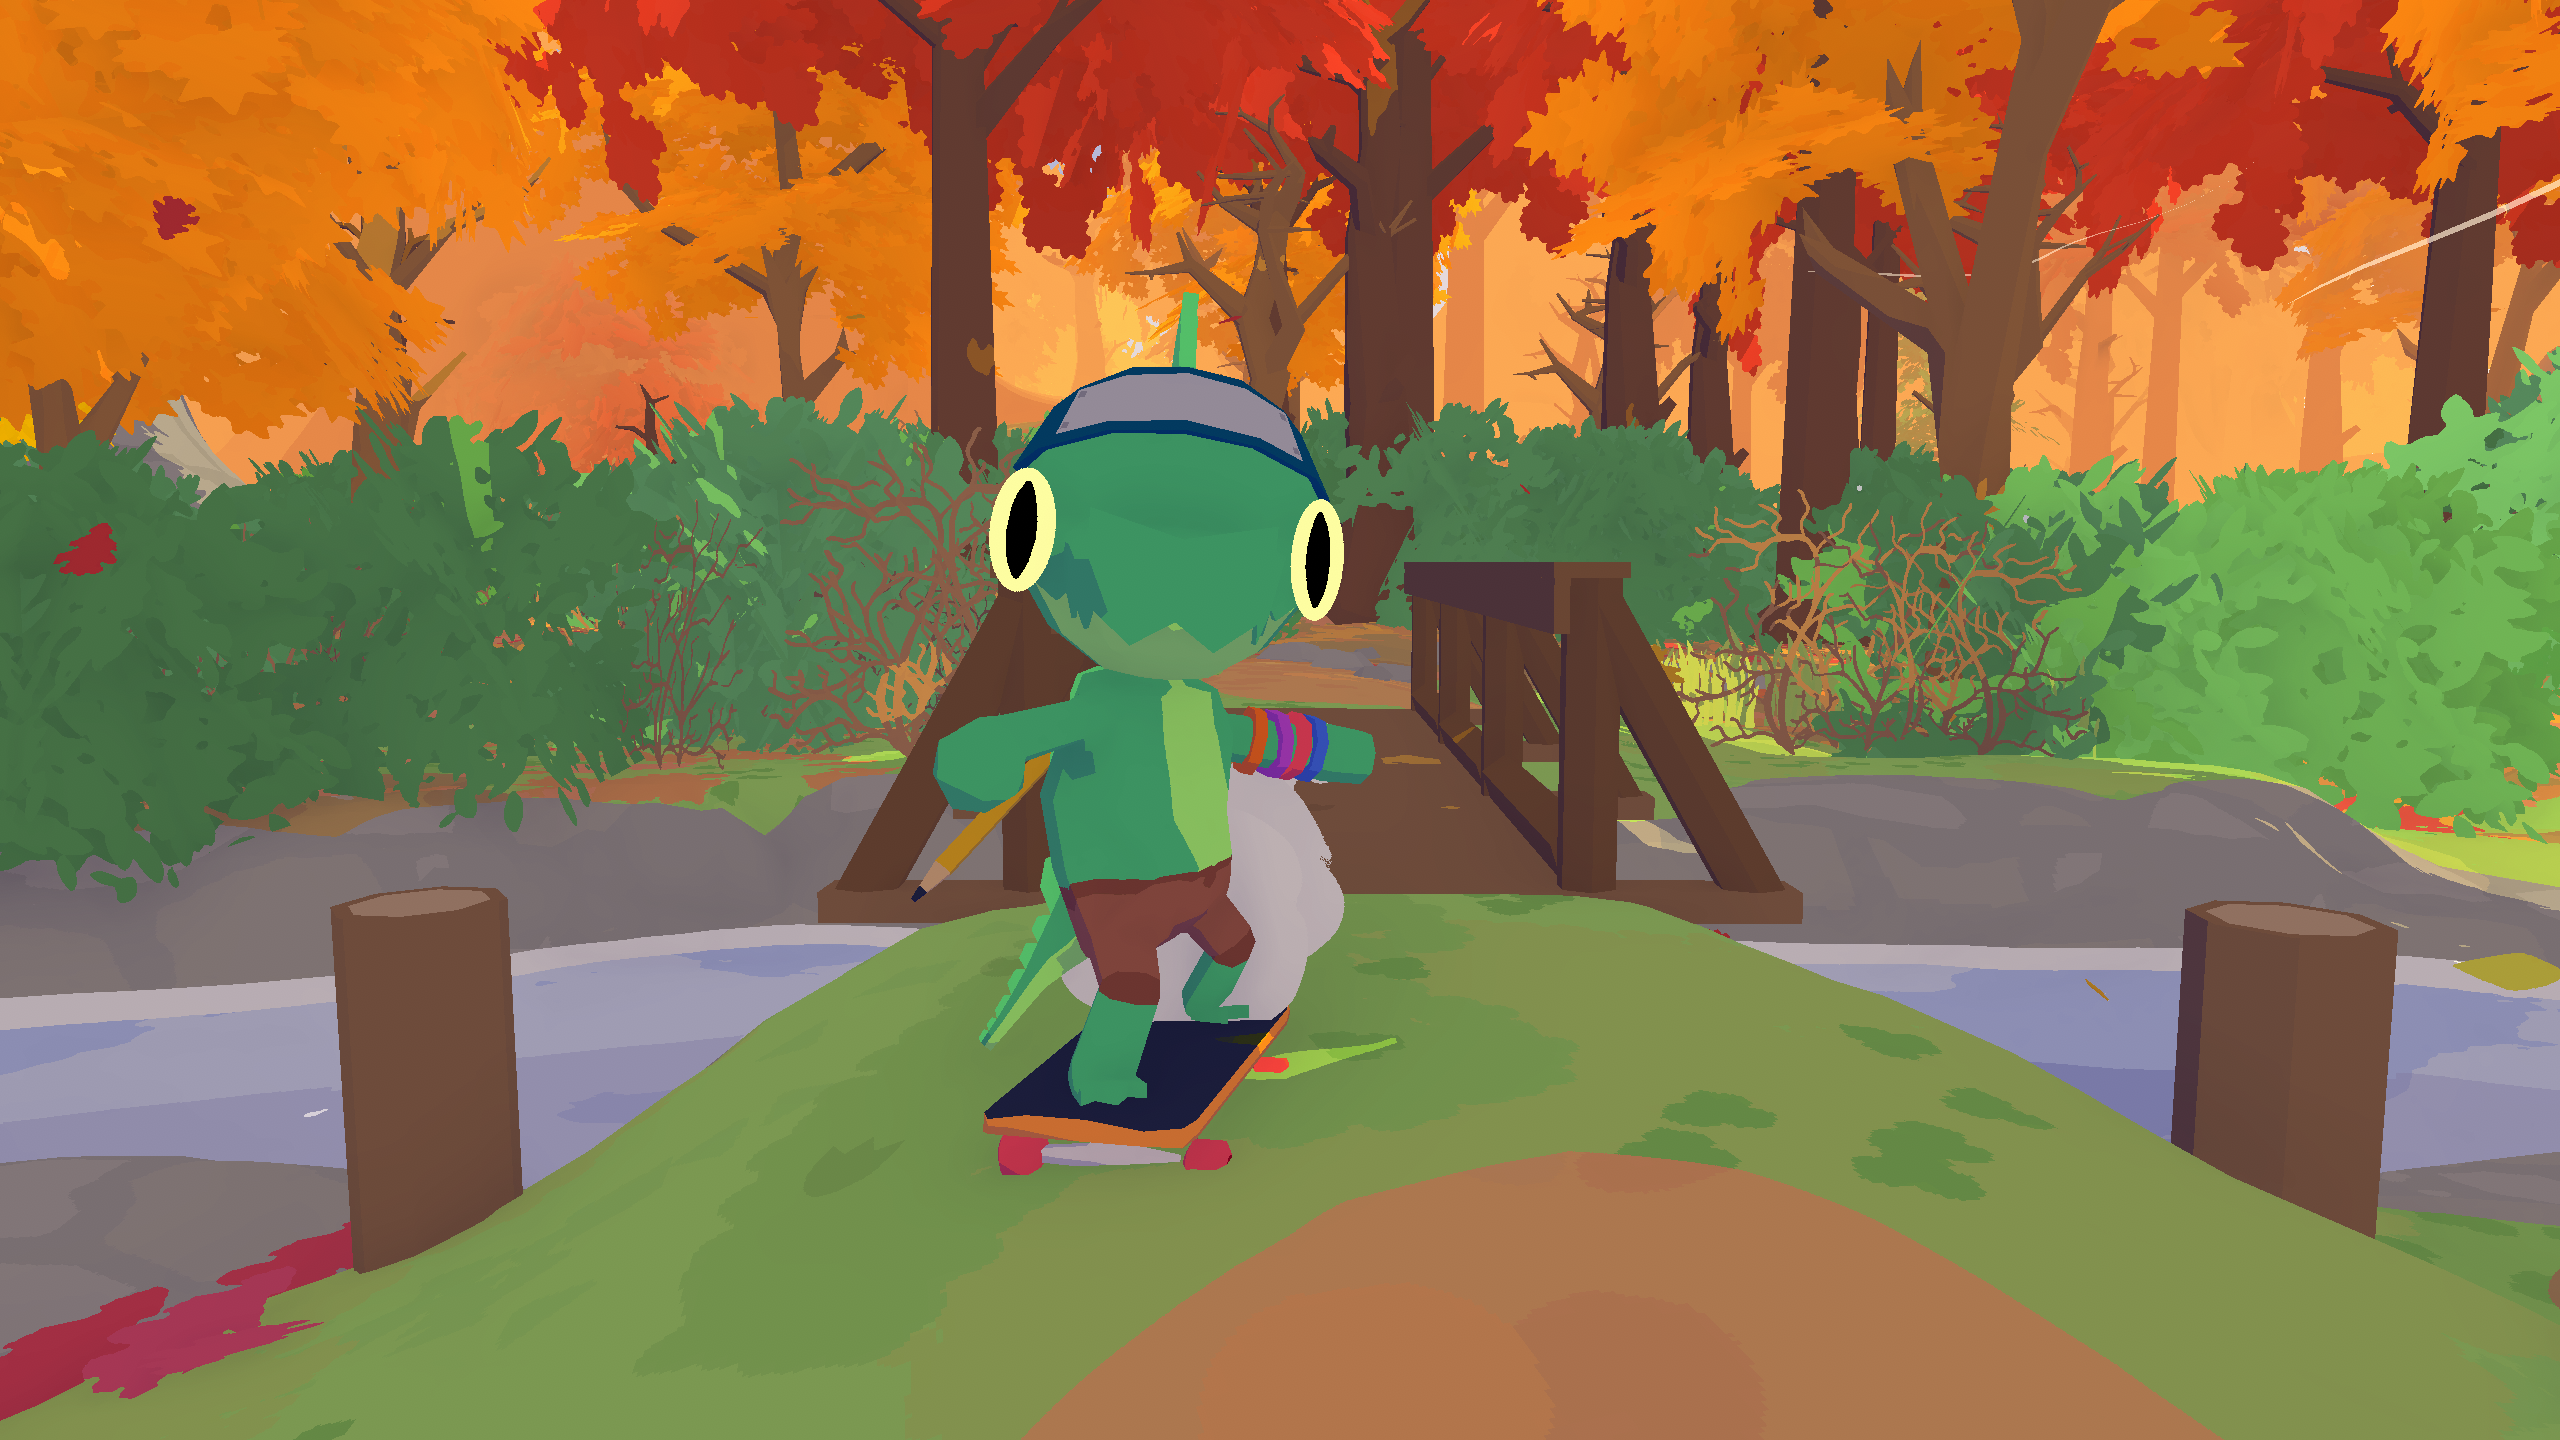 Lil Gator riding a skateboard.